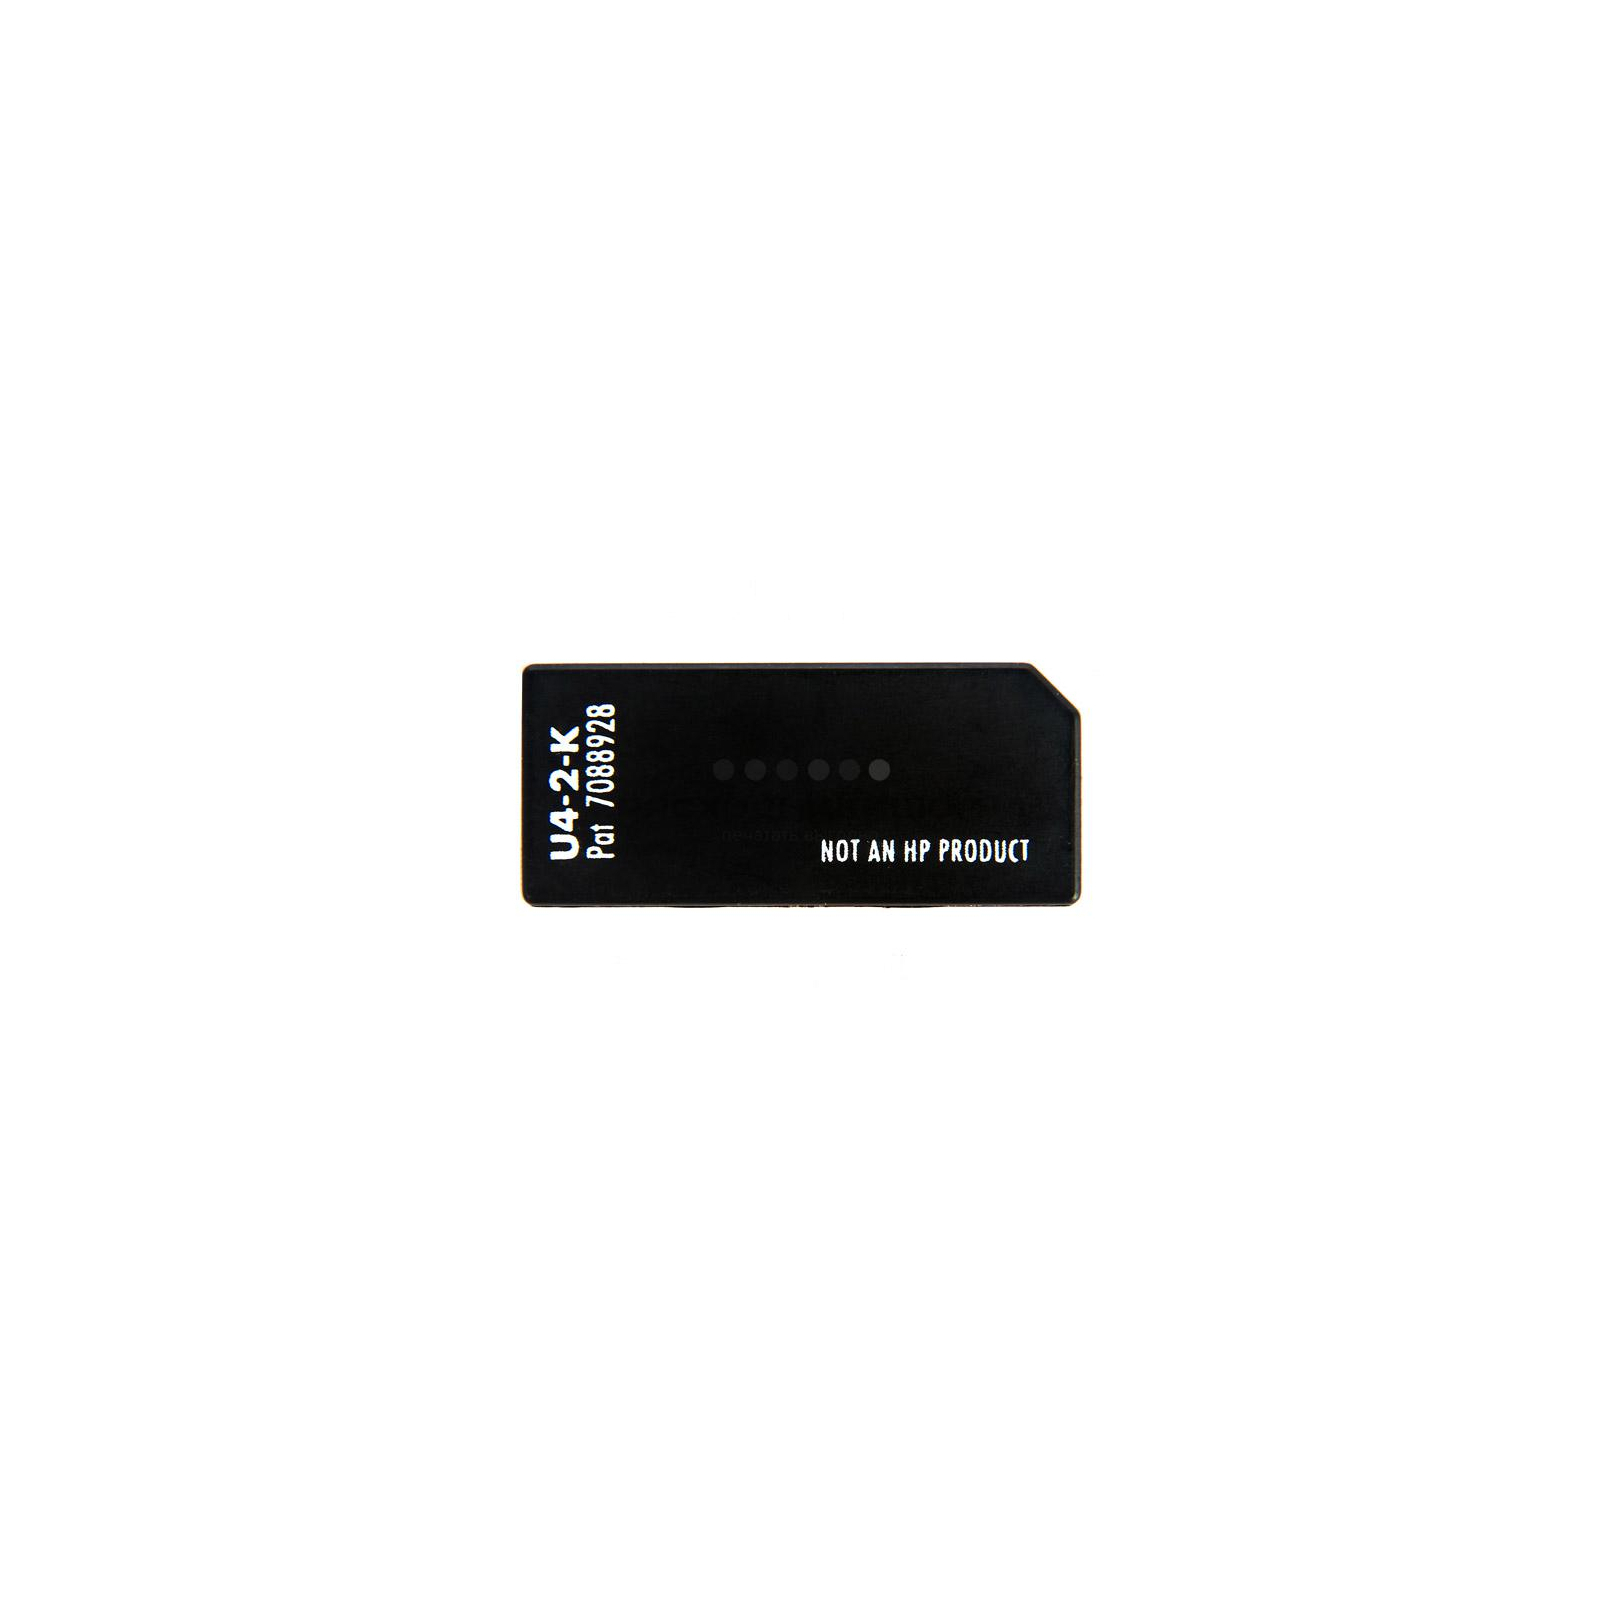 Чип для картриджа HP CLJ 5500 (Black) Static Control (U4-2CHIP-K)